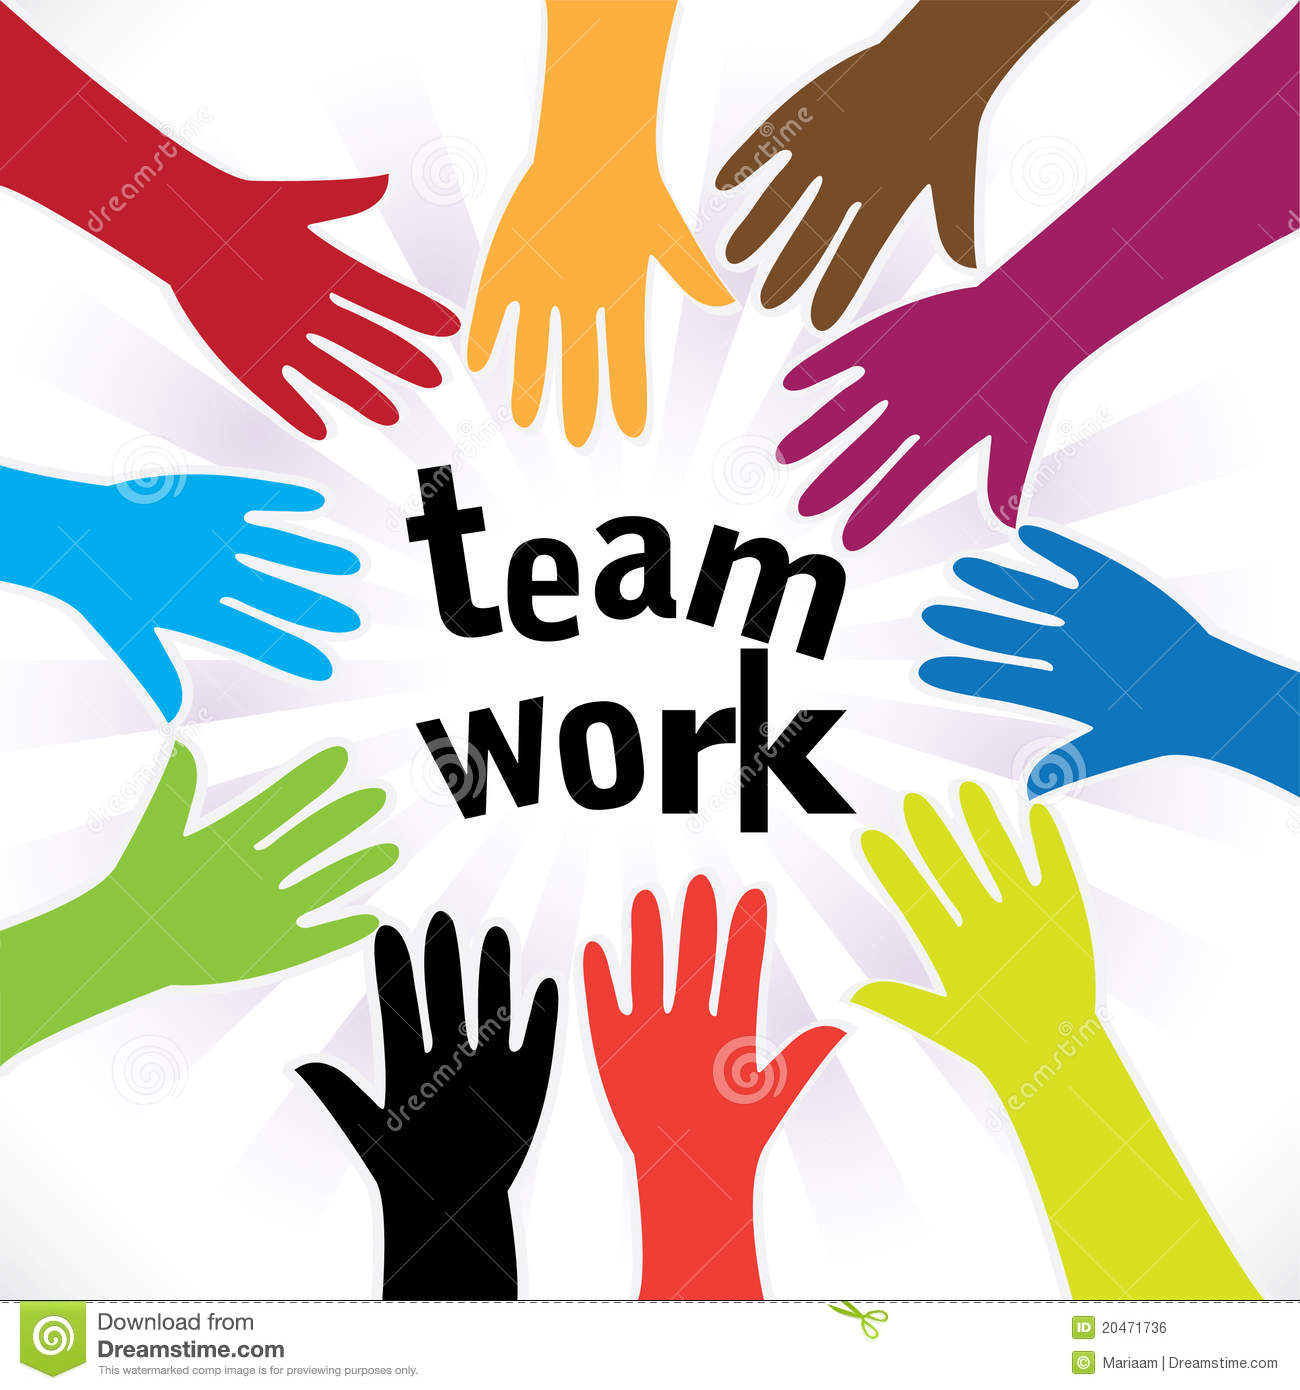 Teamwork diversity Royalty Free Stock Image